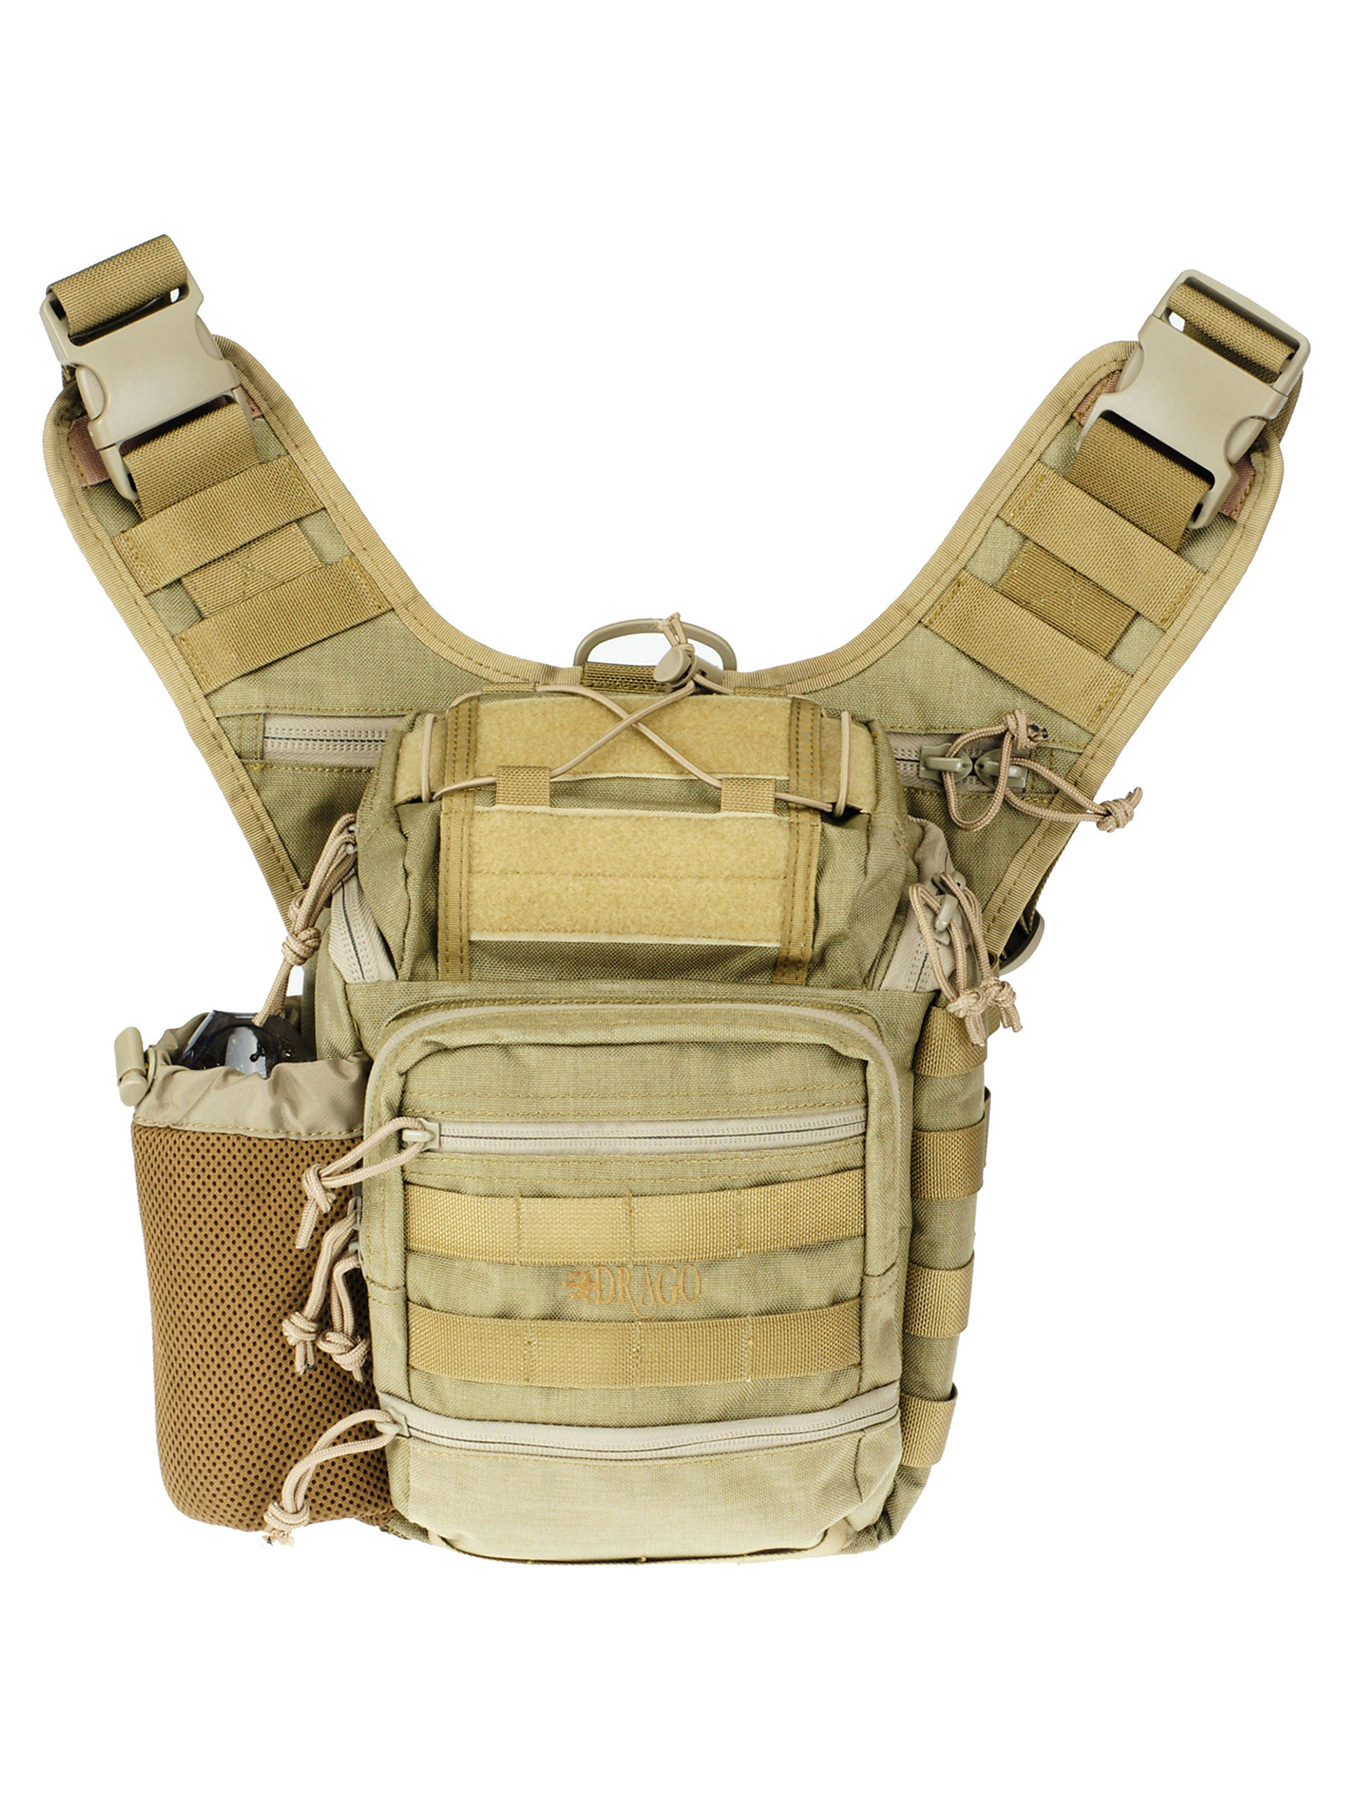 Pro Range Bag - Drago Gear